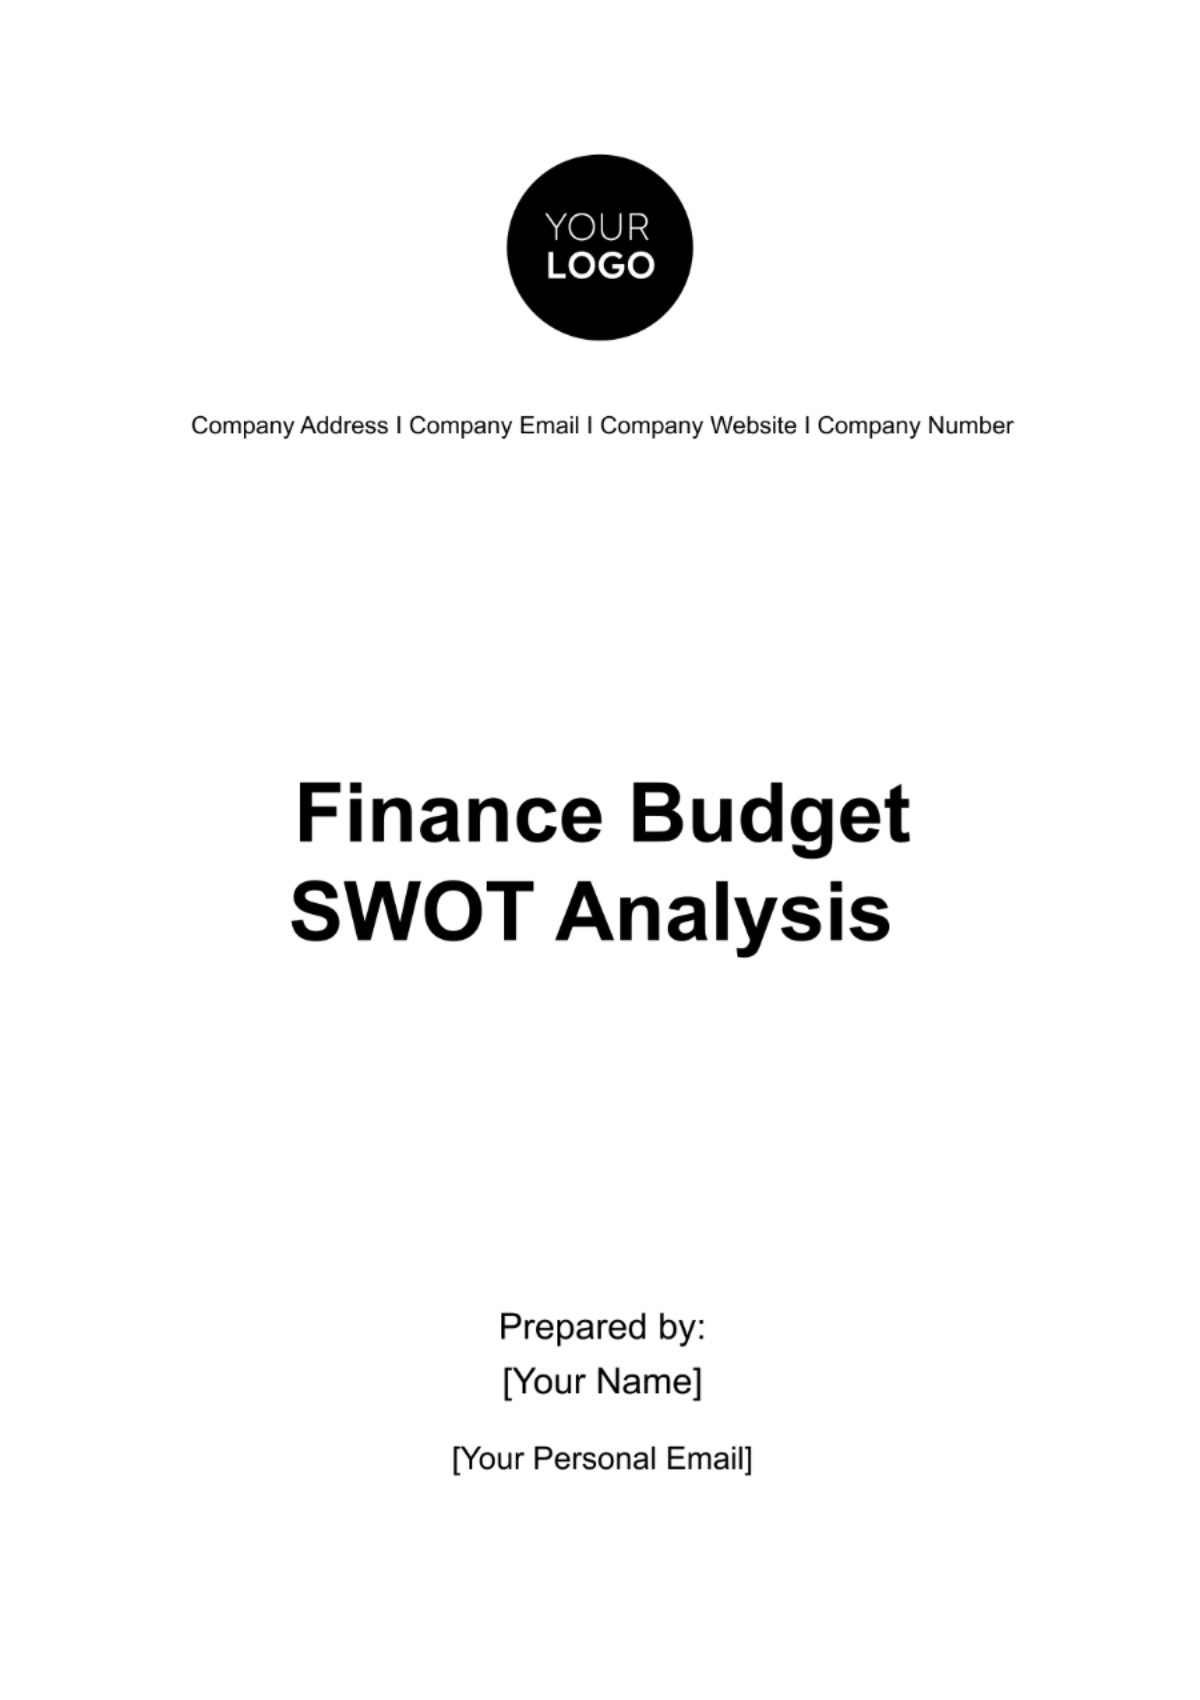 Finance Budget SWOT Analysis Template